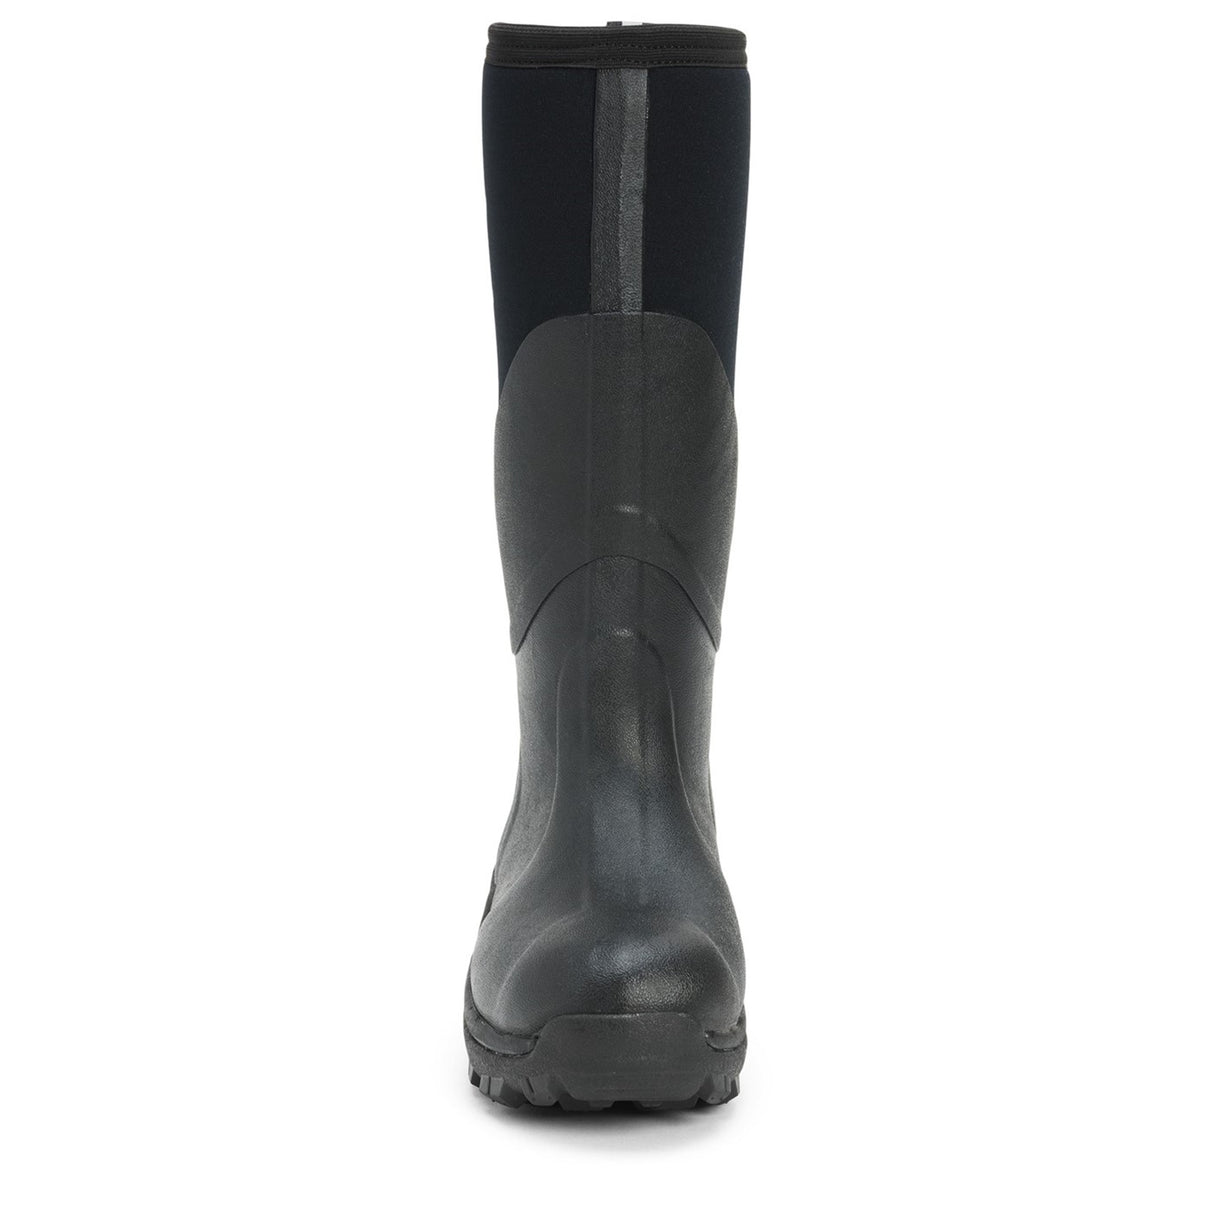 Unisex Muckmaster Tall Boots Black